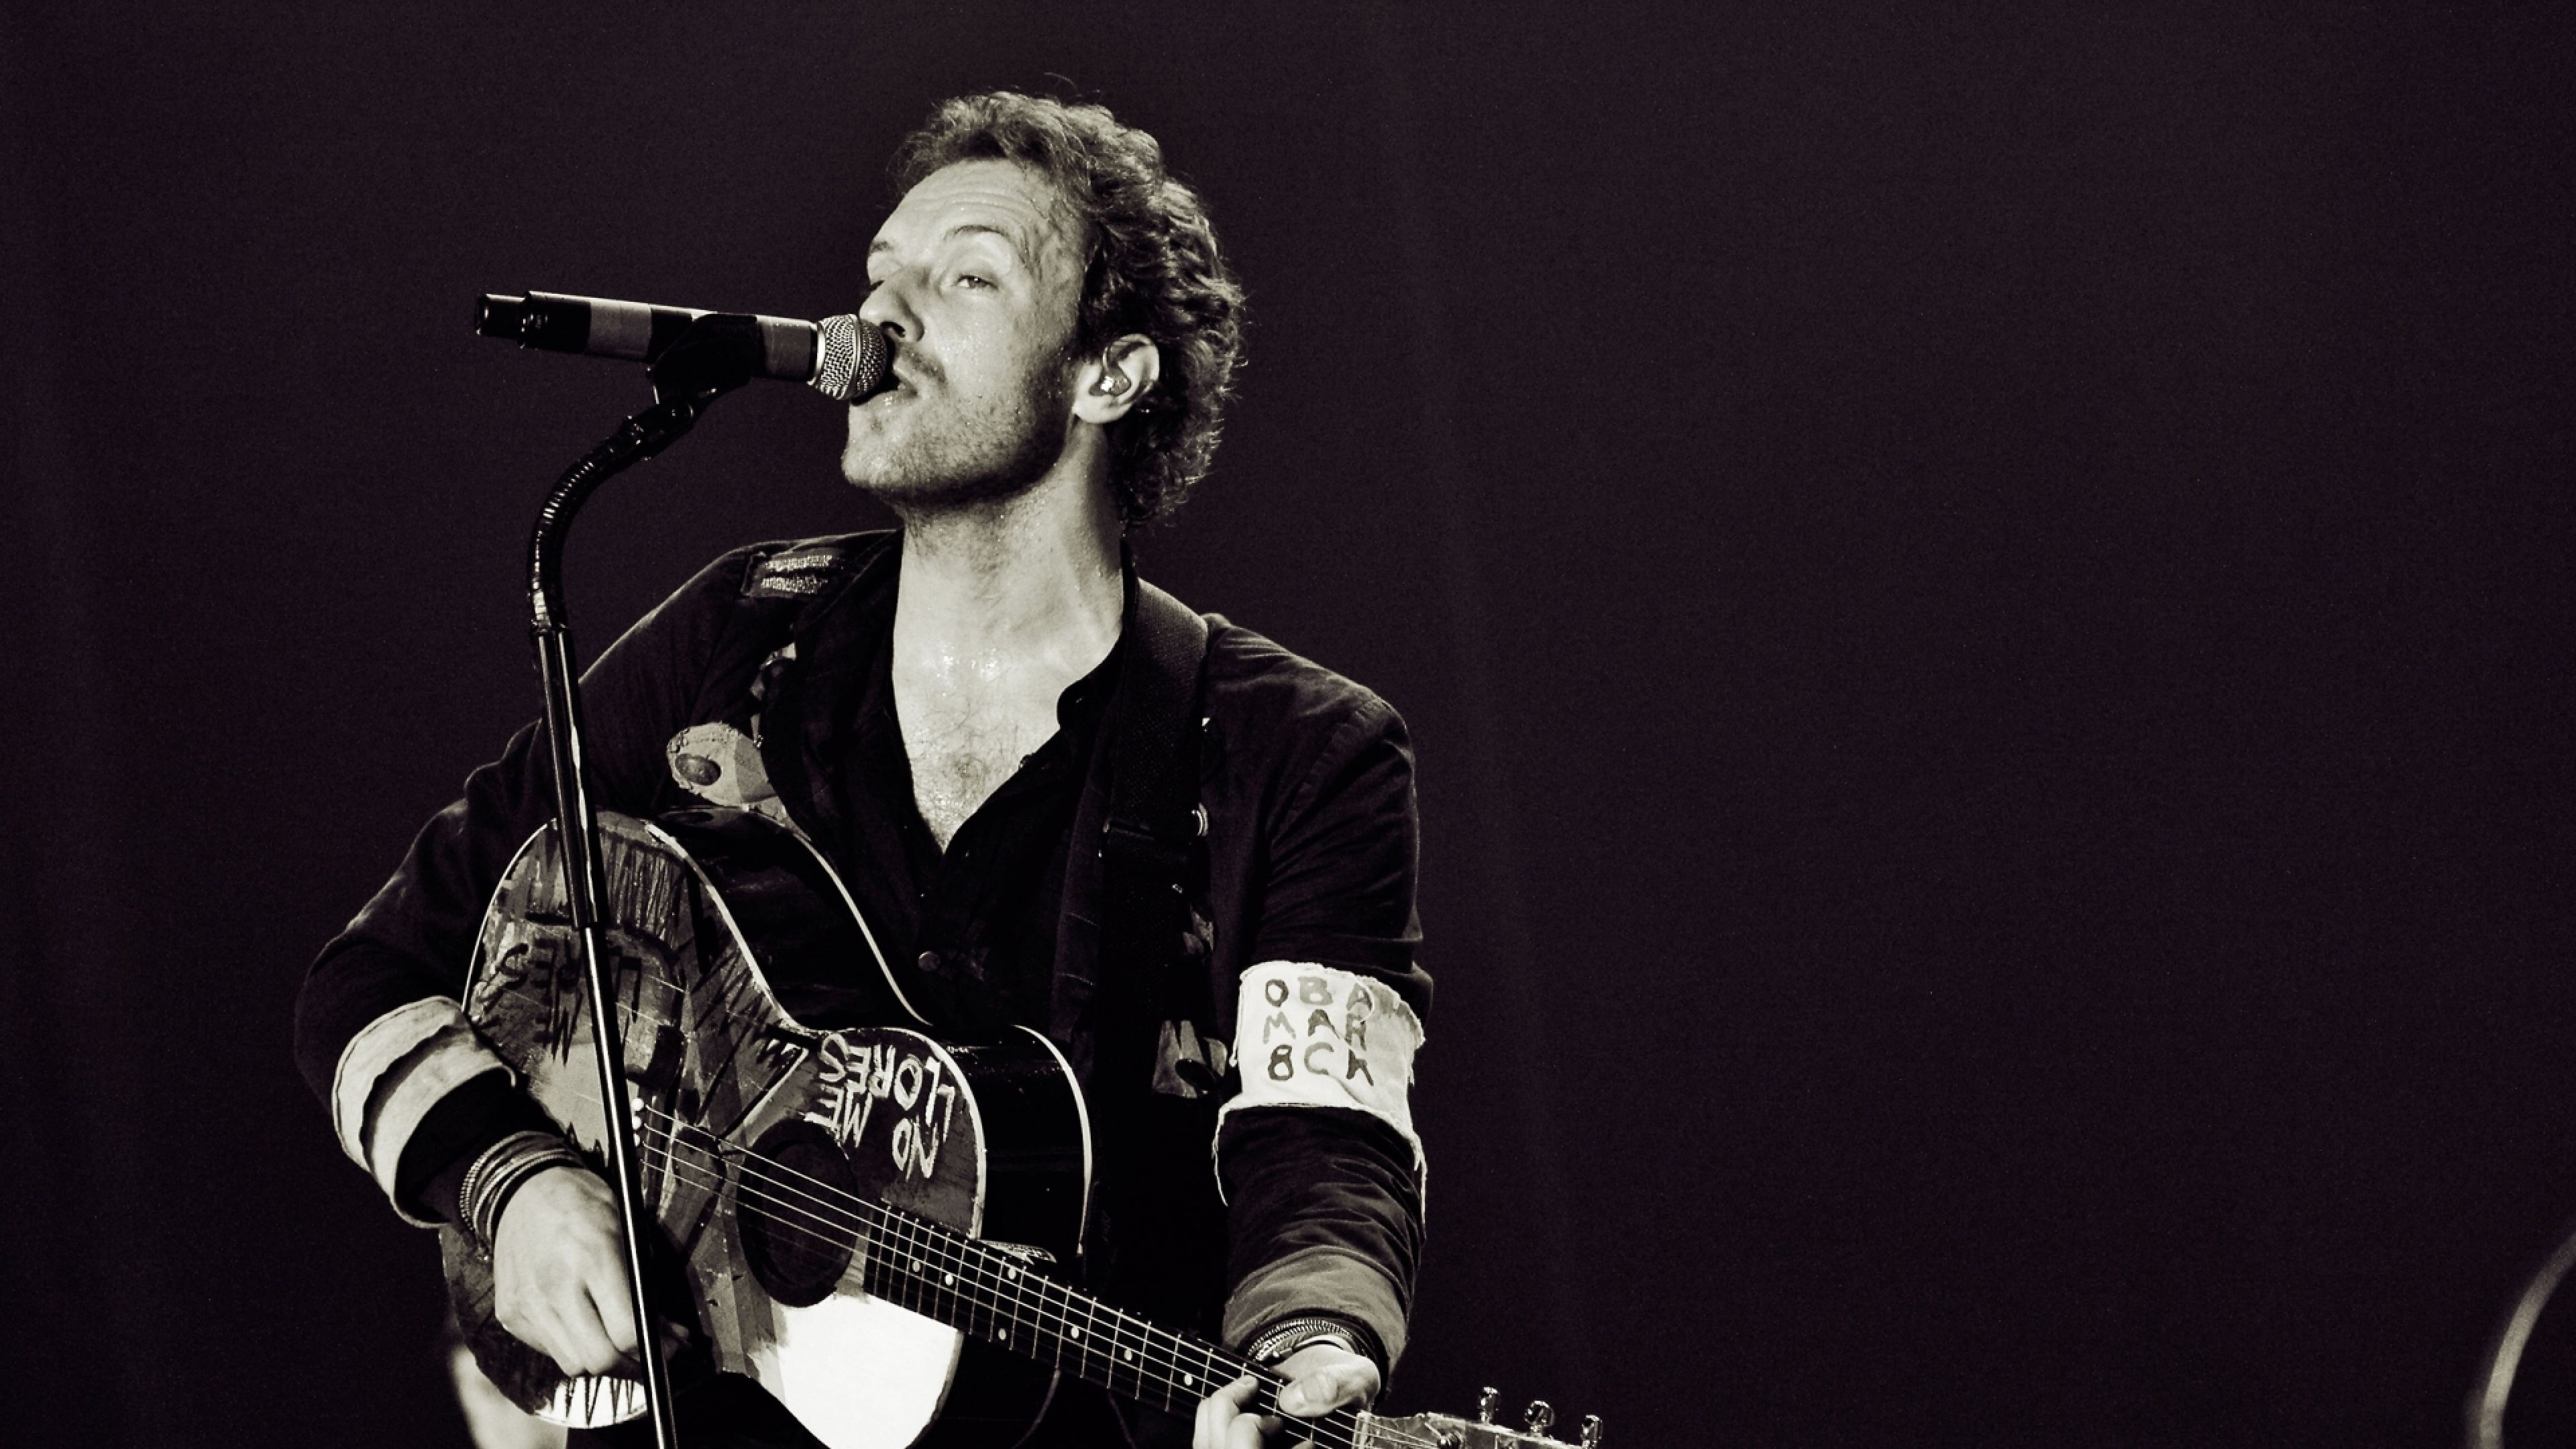 Download Wallpaper 3840x2160 Coldplay, Singing, Microphone, Guitar